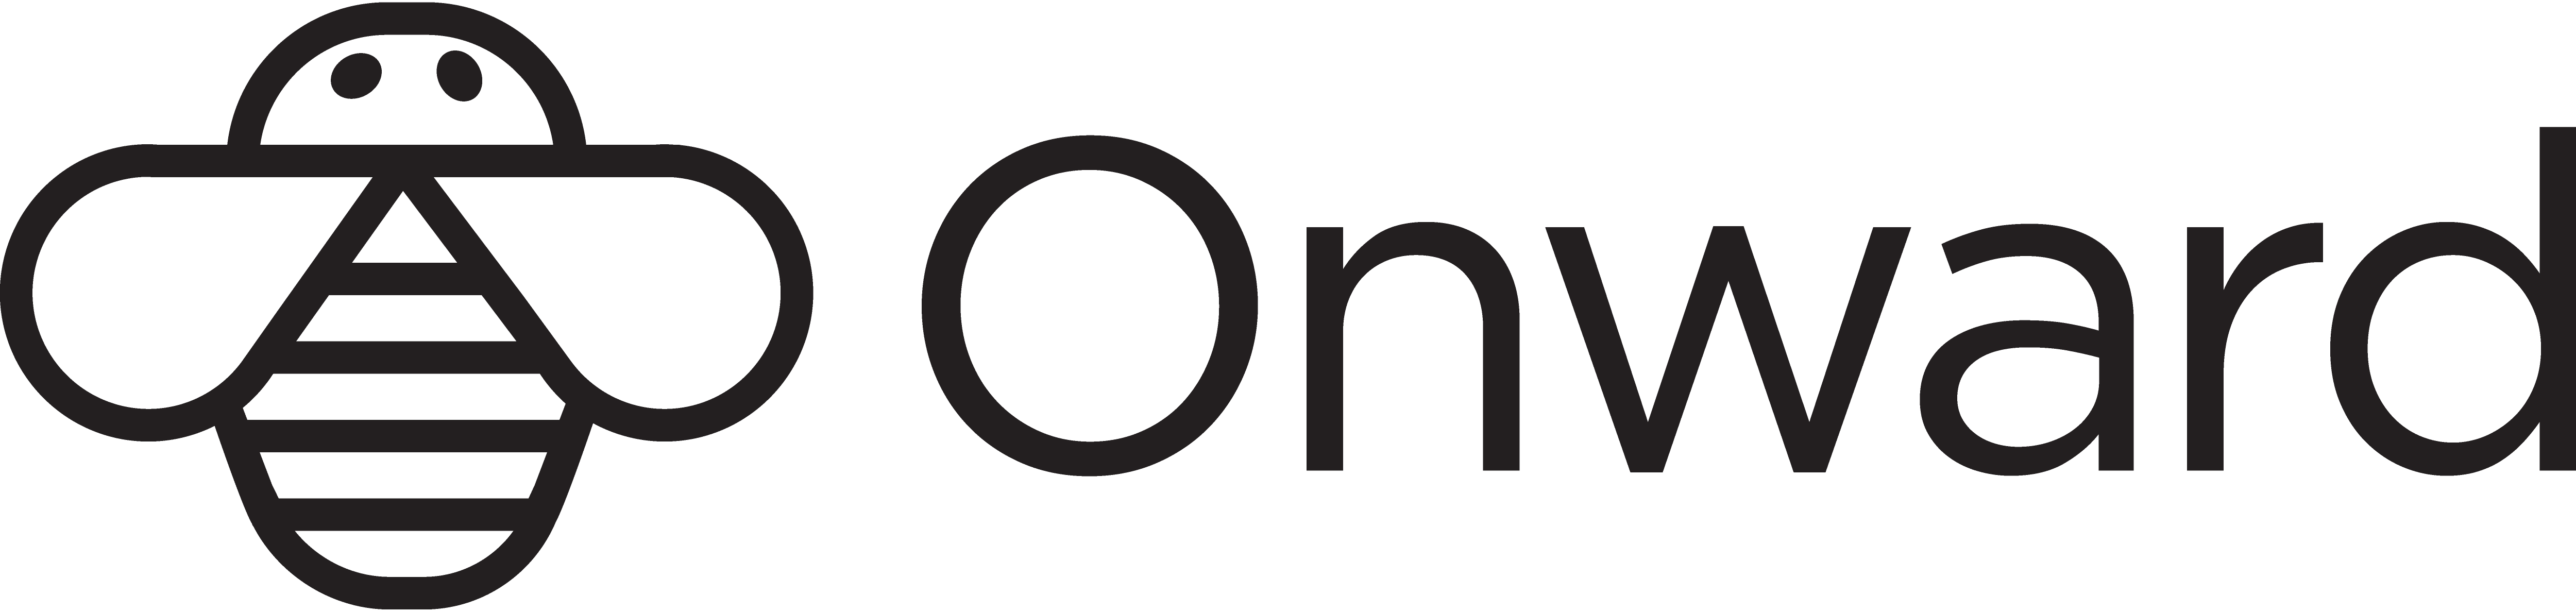 Onward logo